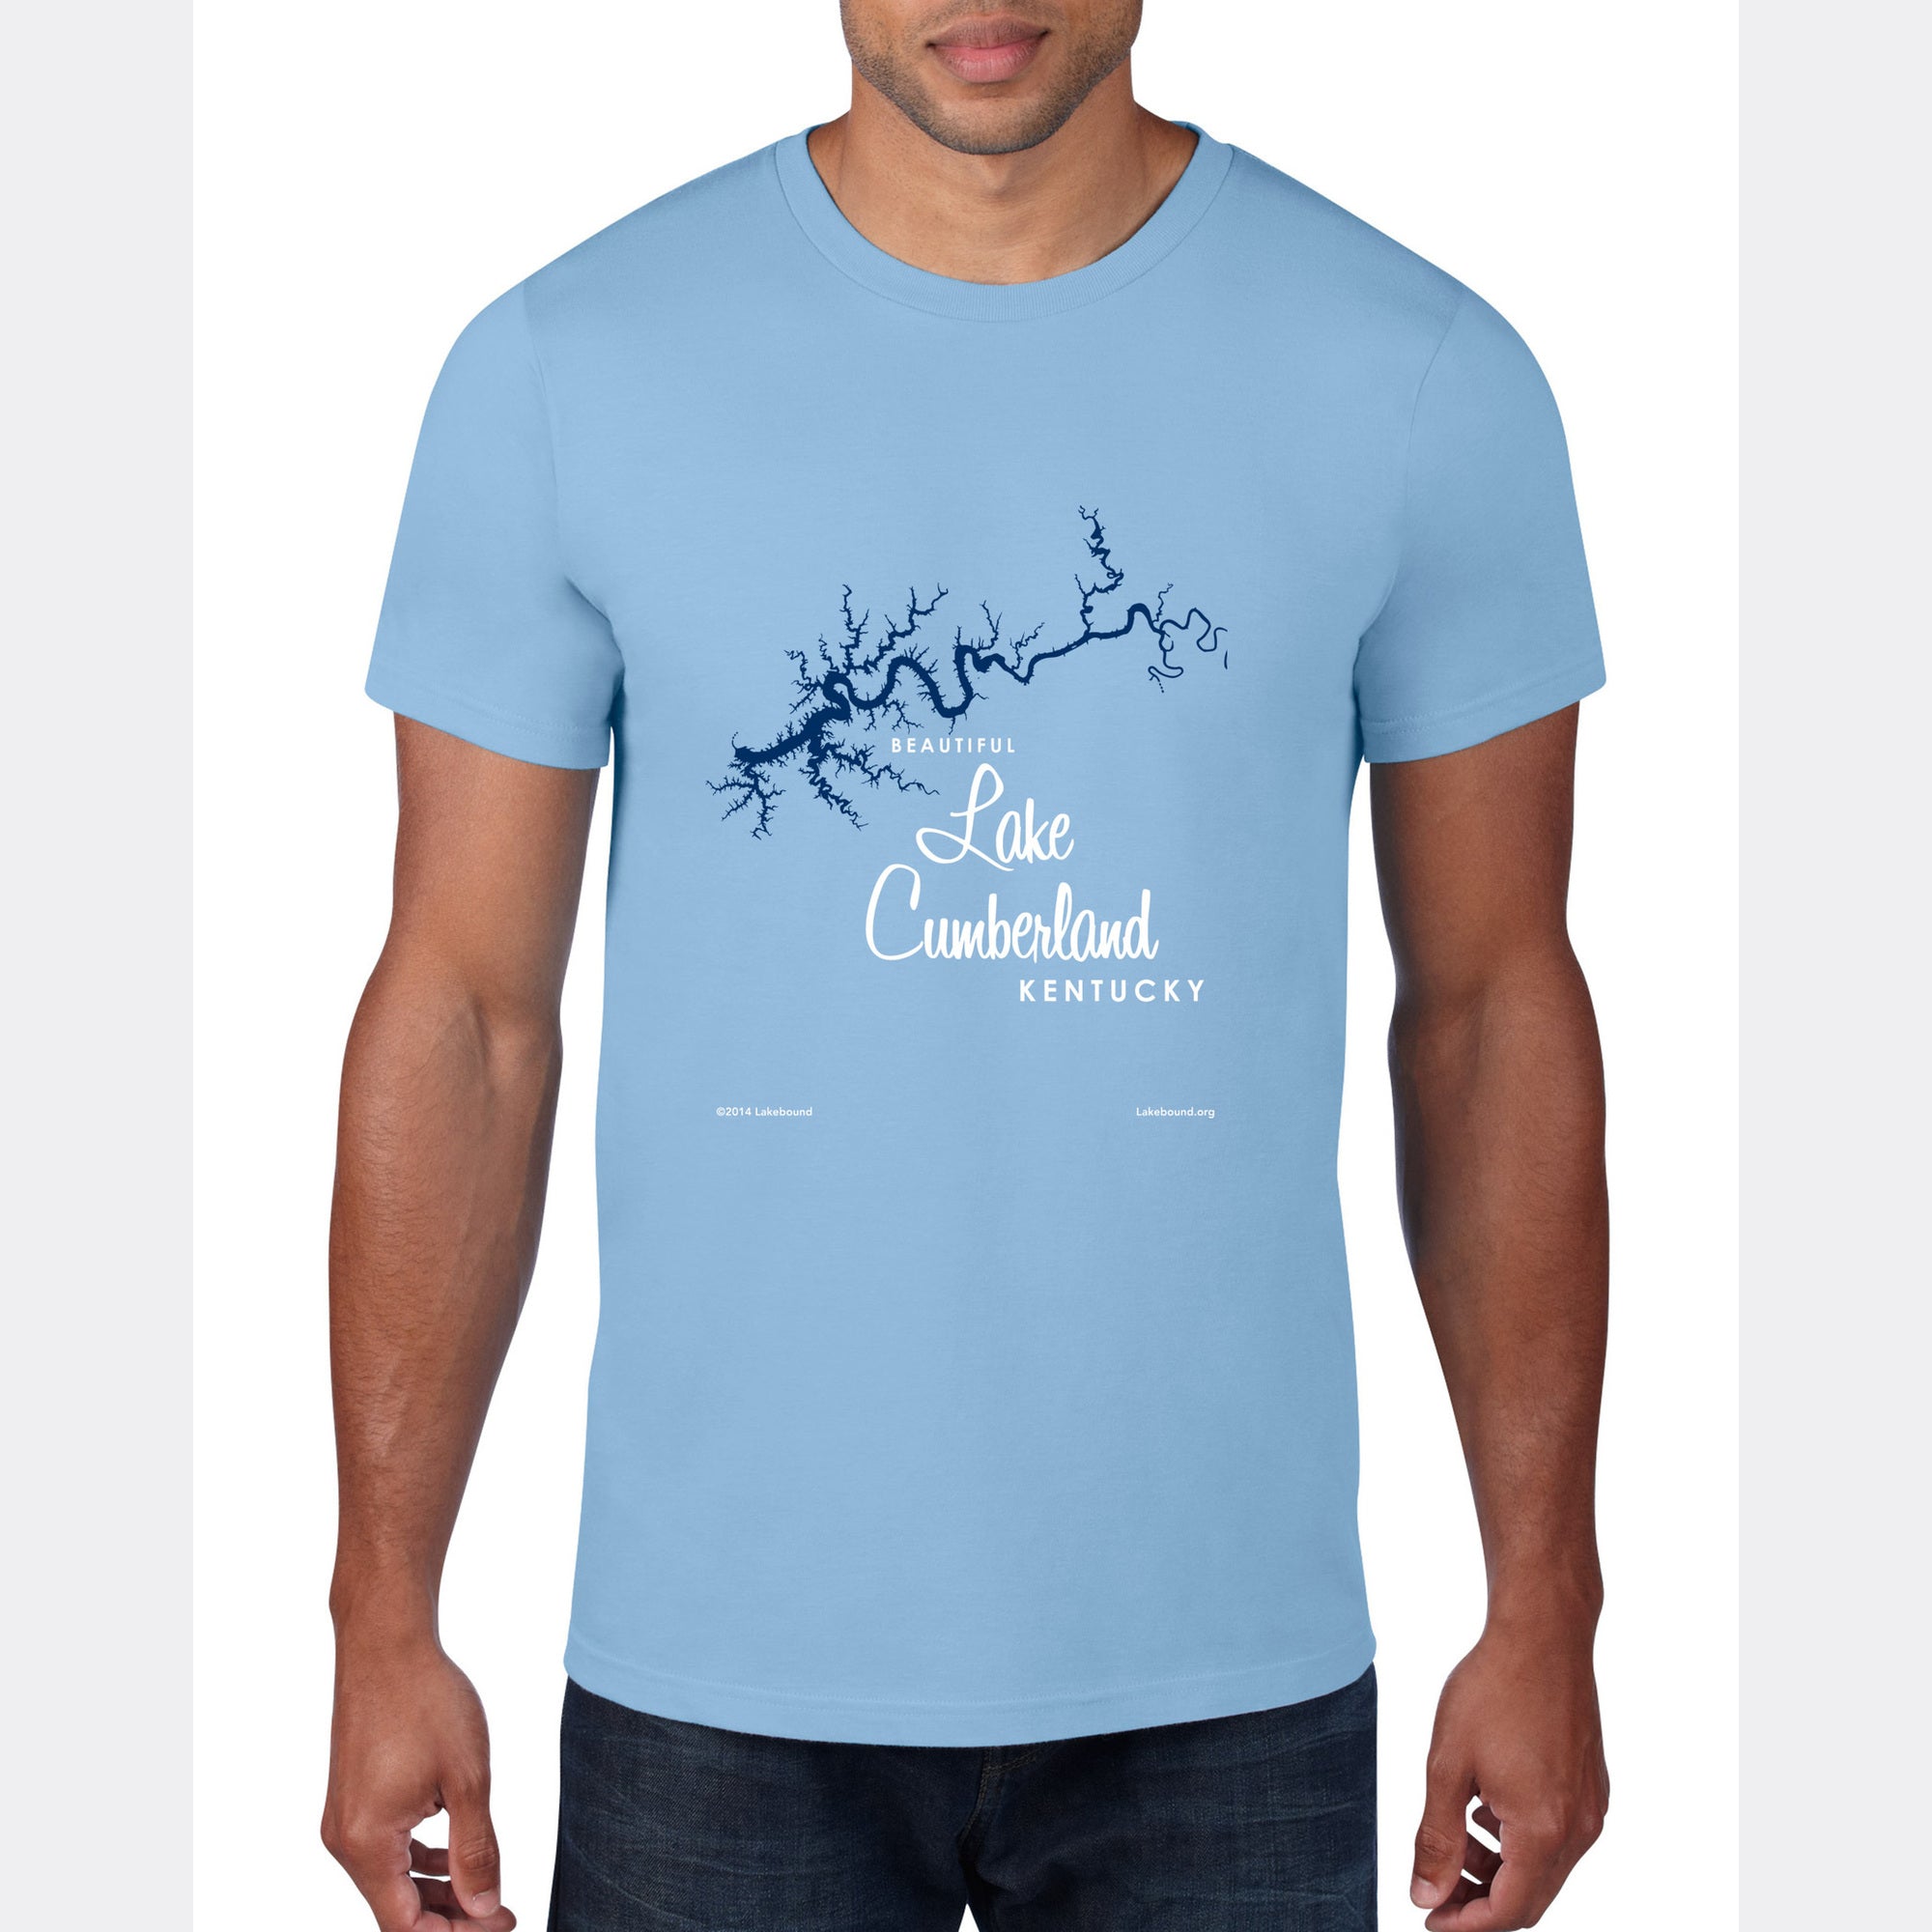 Lake Cumberland Kentucky, T-Shirt